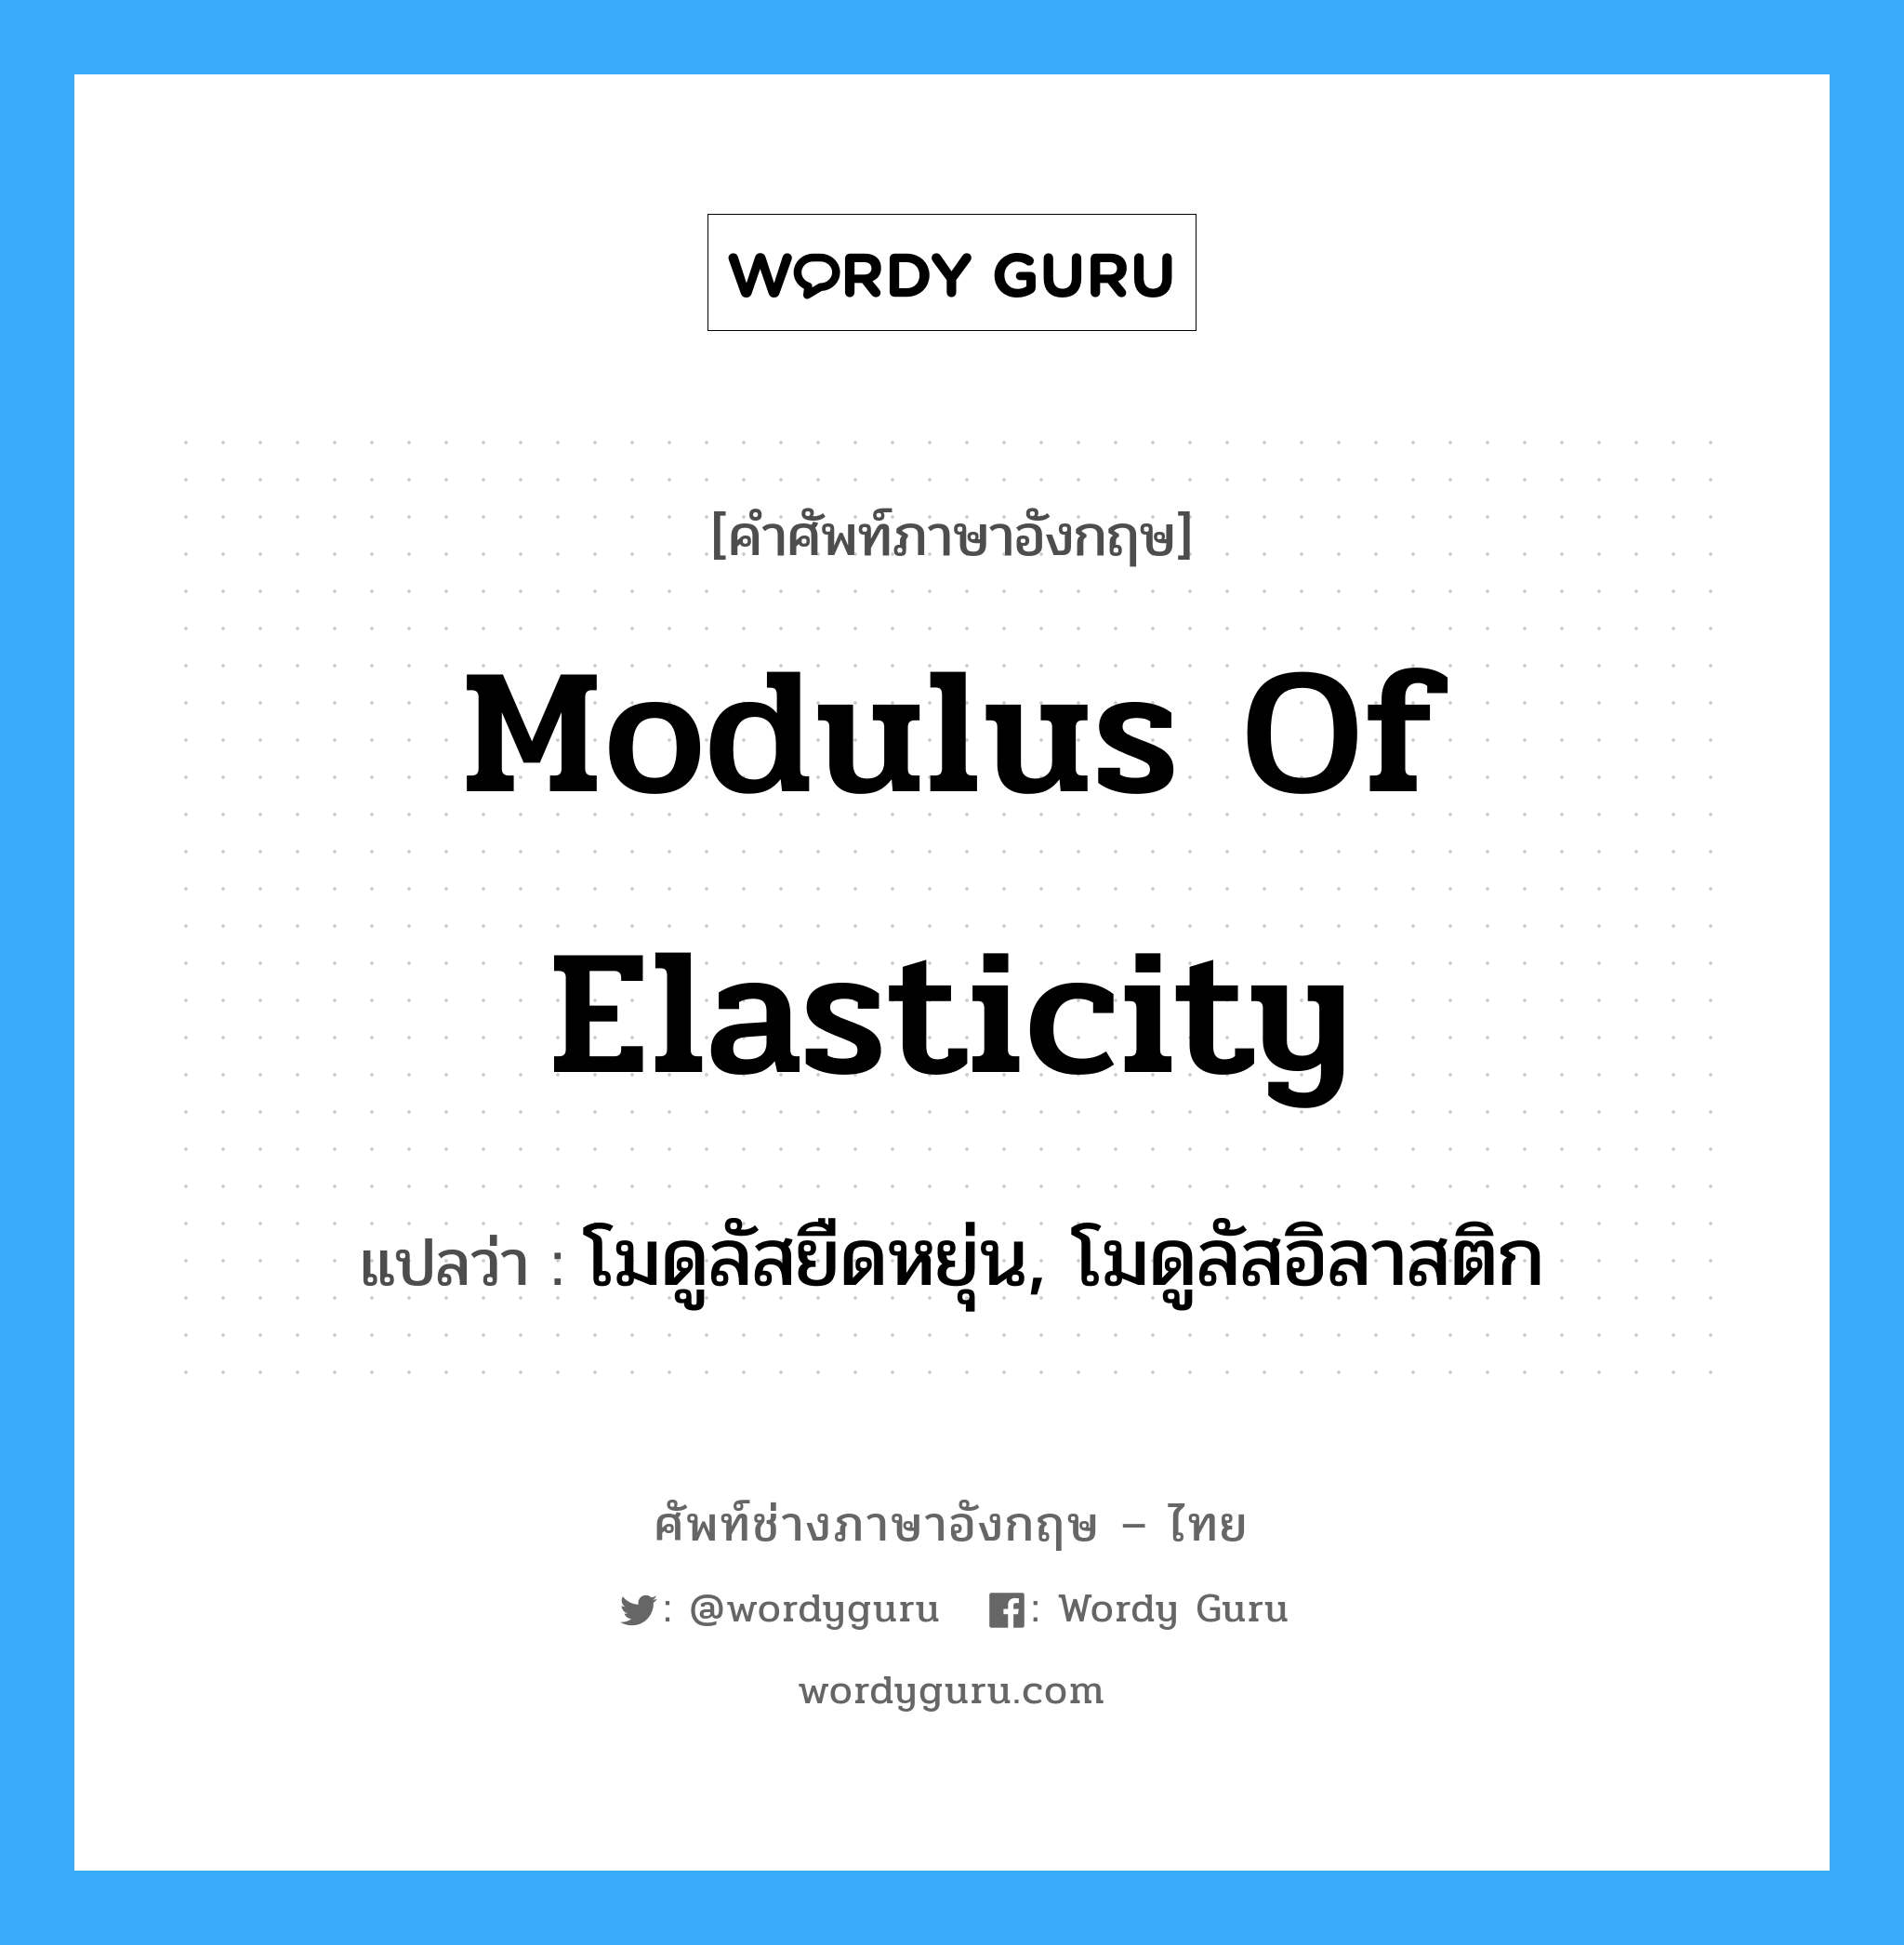 Modulus of elasticity: แปลว่า?, คำศัพท์ช่างภาษาอังกฤษ - ไทย modulus of elasticity คำศัพท์ภาษาอังกฤษ modulus of elasticity แปลว่า โมดูลัสยืดหยุ่น, โมดูลัสอิลาสติก